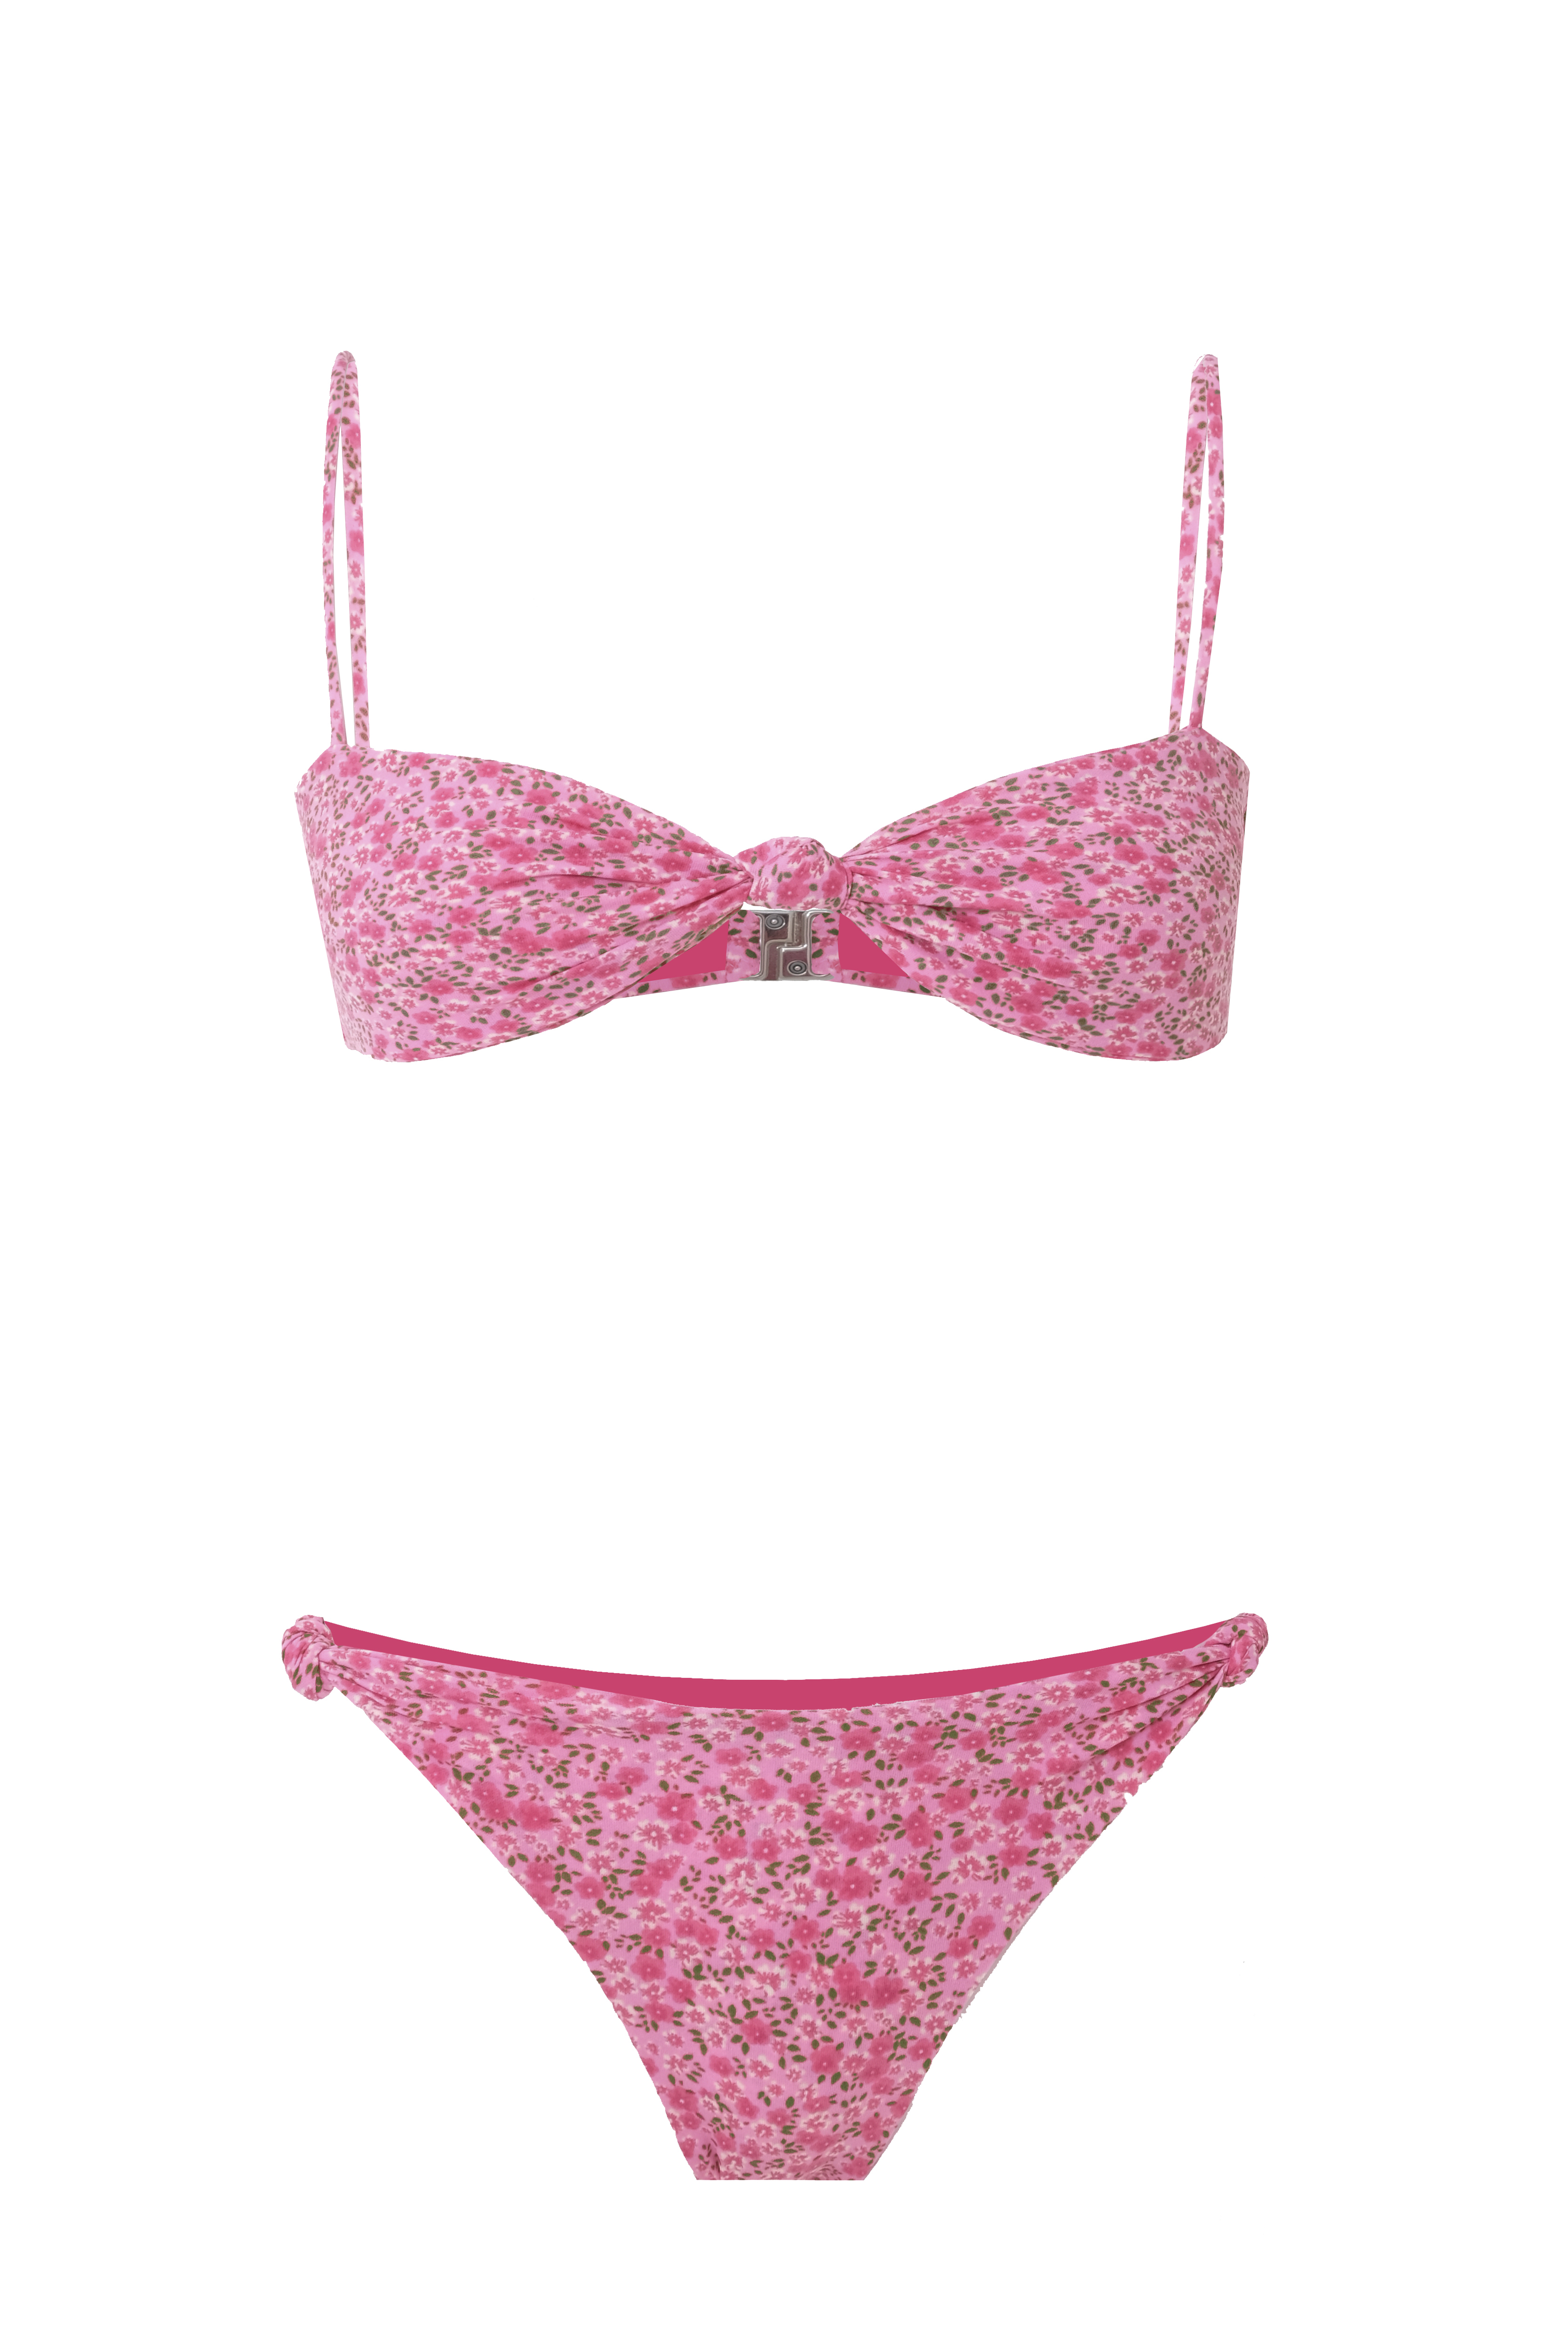 MIKKI Knot Detailed Floral Print Bikini Set